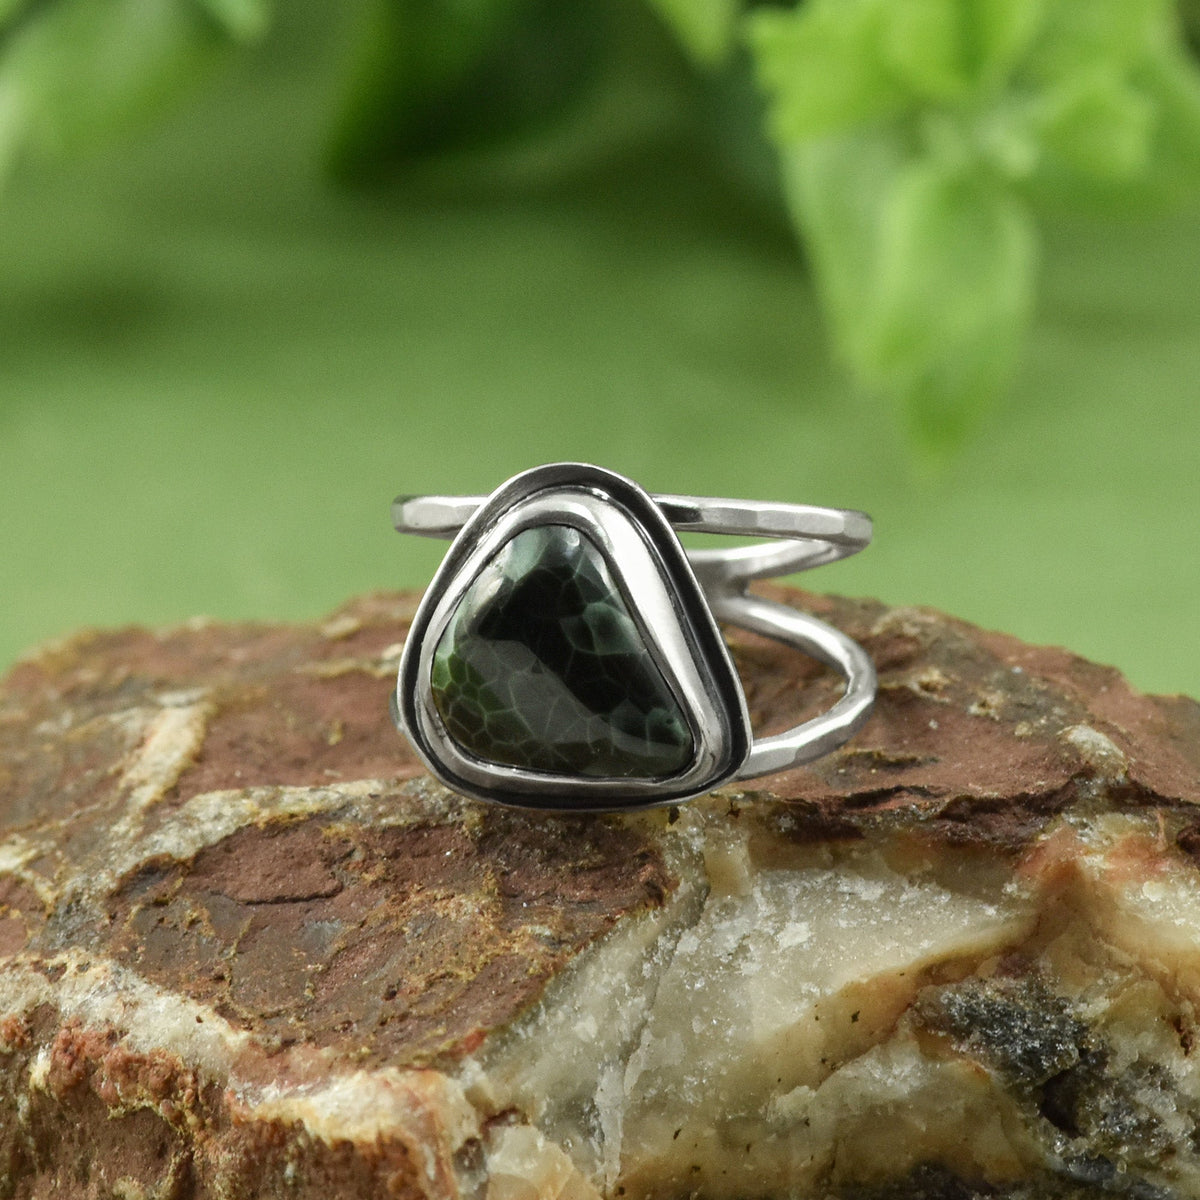 Michigan Greenstone Ring - Size 9.5 - Ring   6952 - handmade by Beth Millner Jewelry